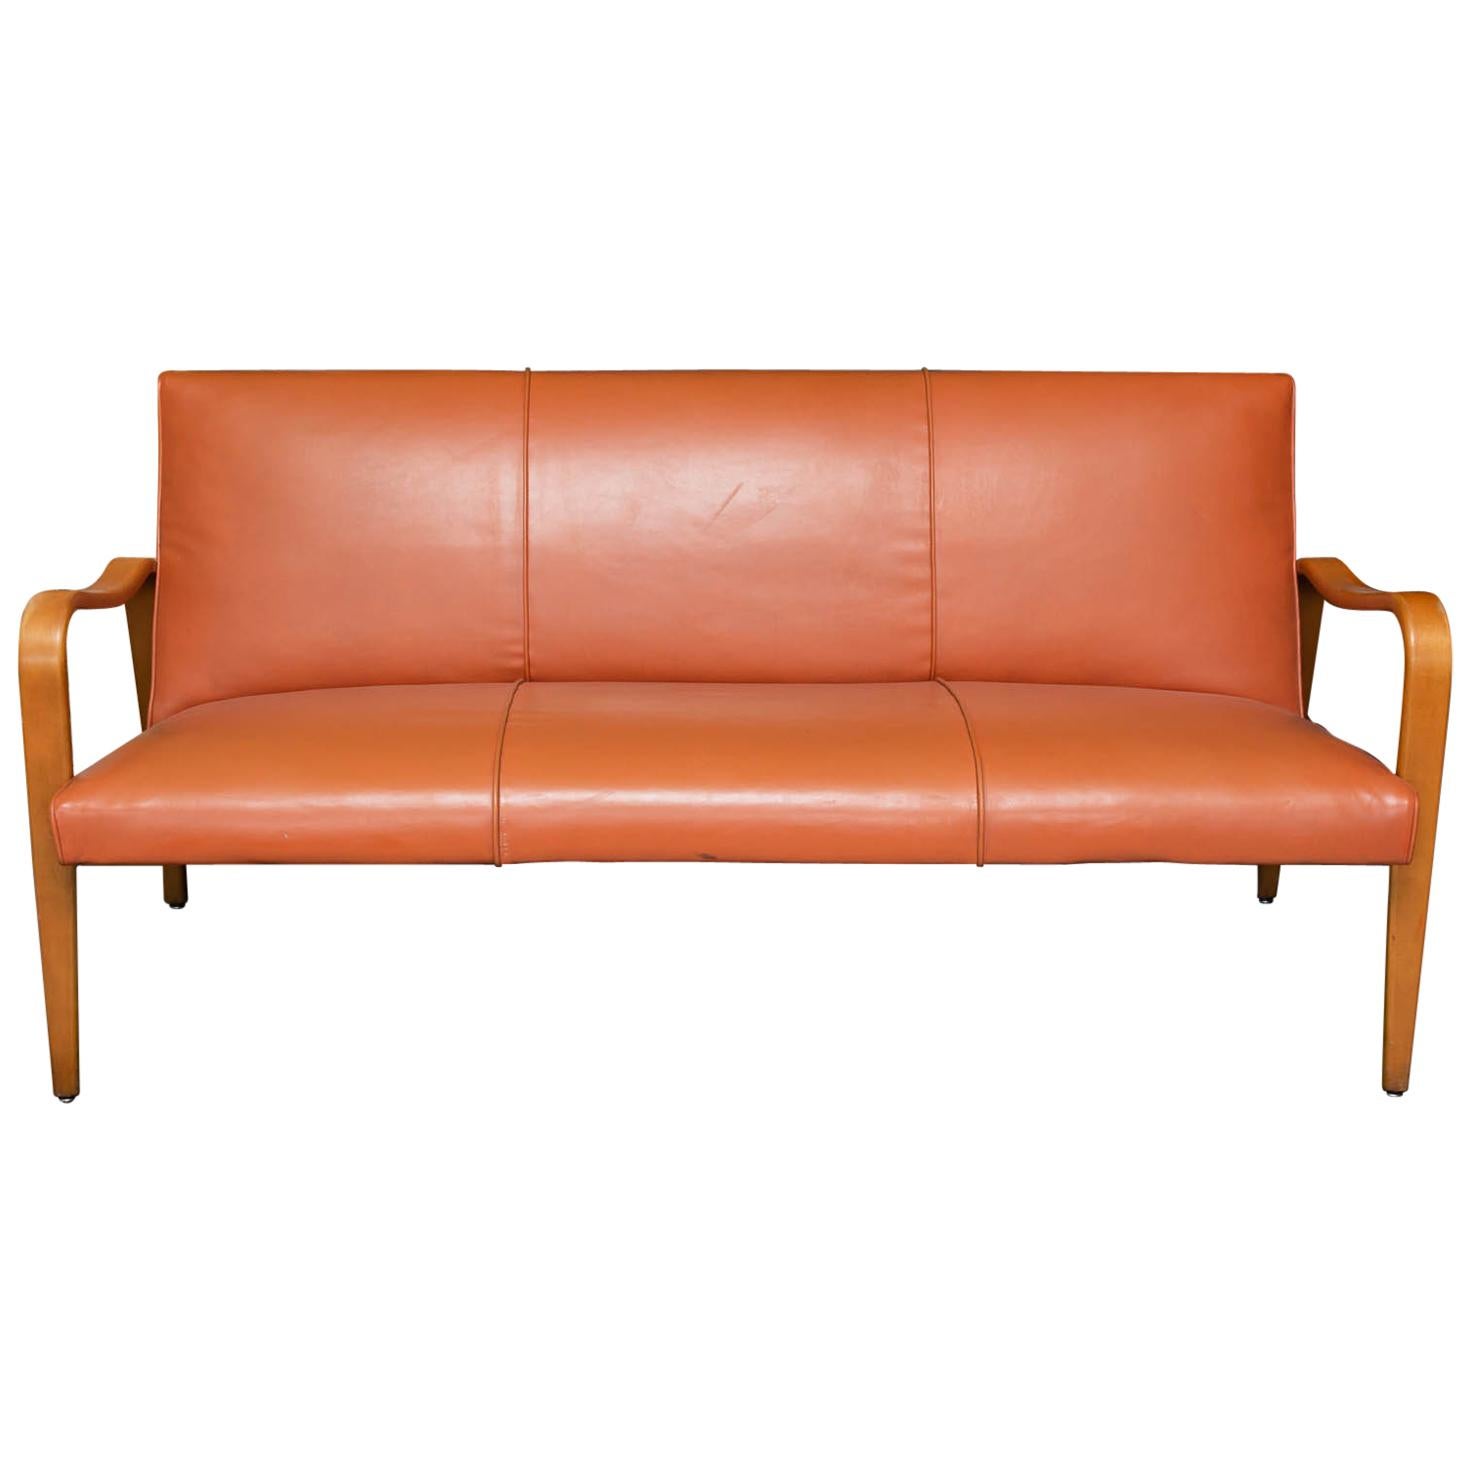 Thonet Bent Arm Leather Sofa